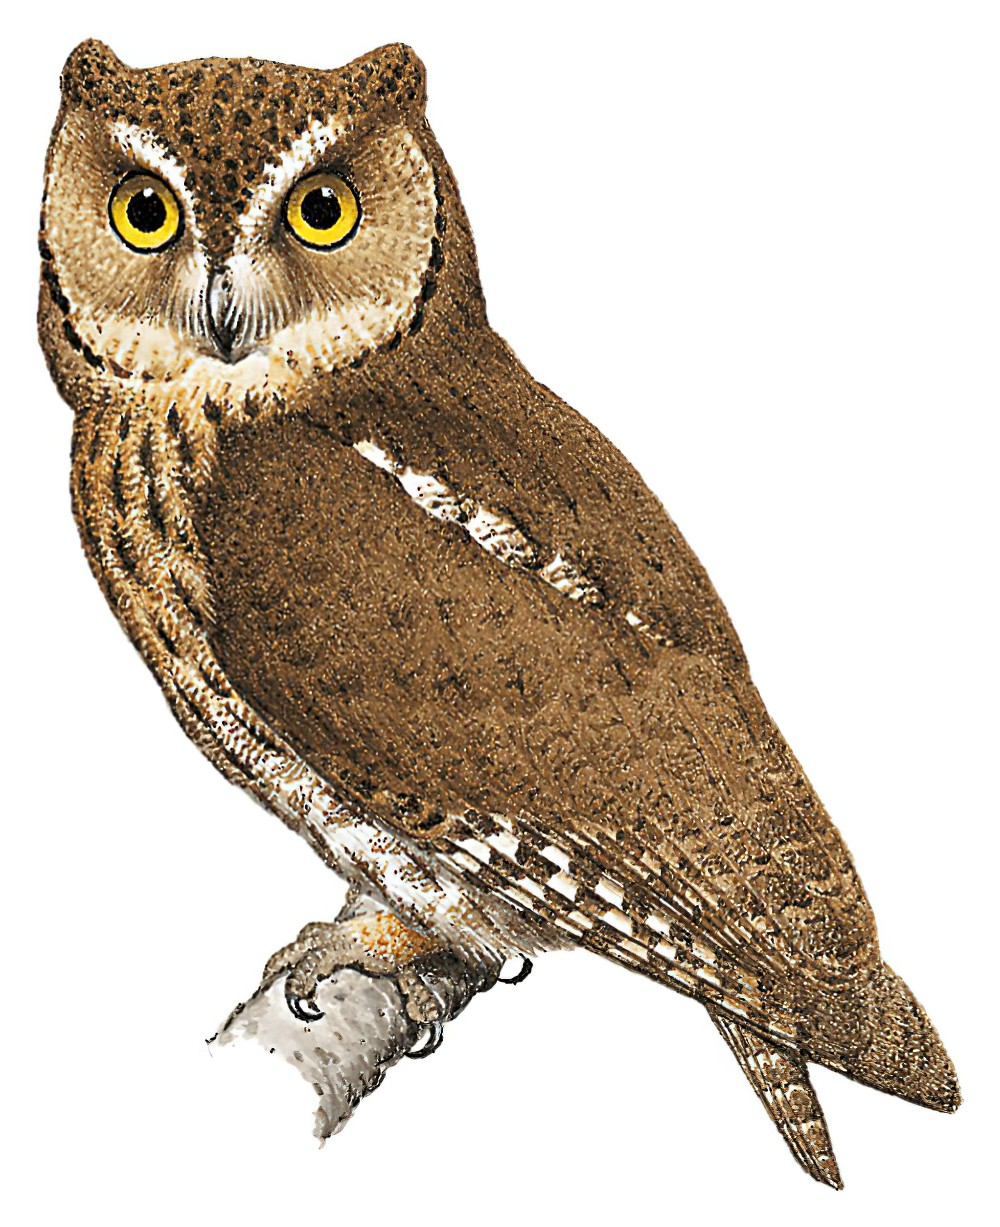 Mantanani Scops-Owl / Otus mantananensis